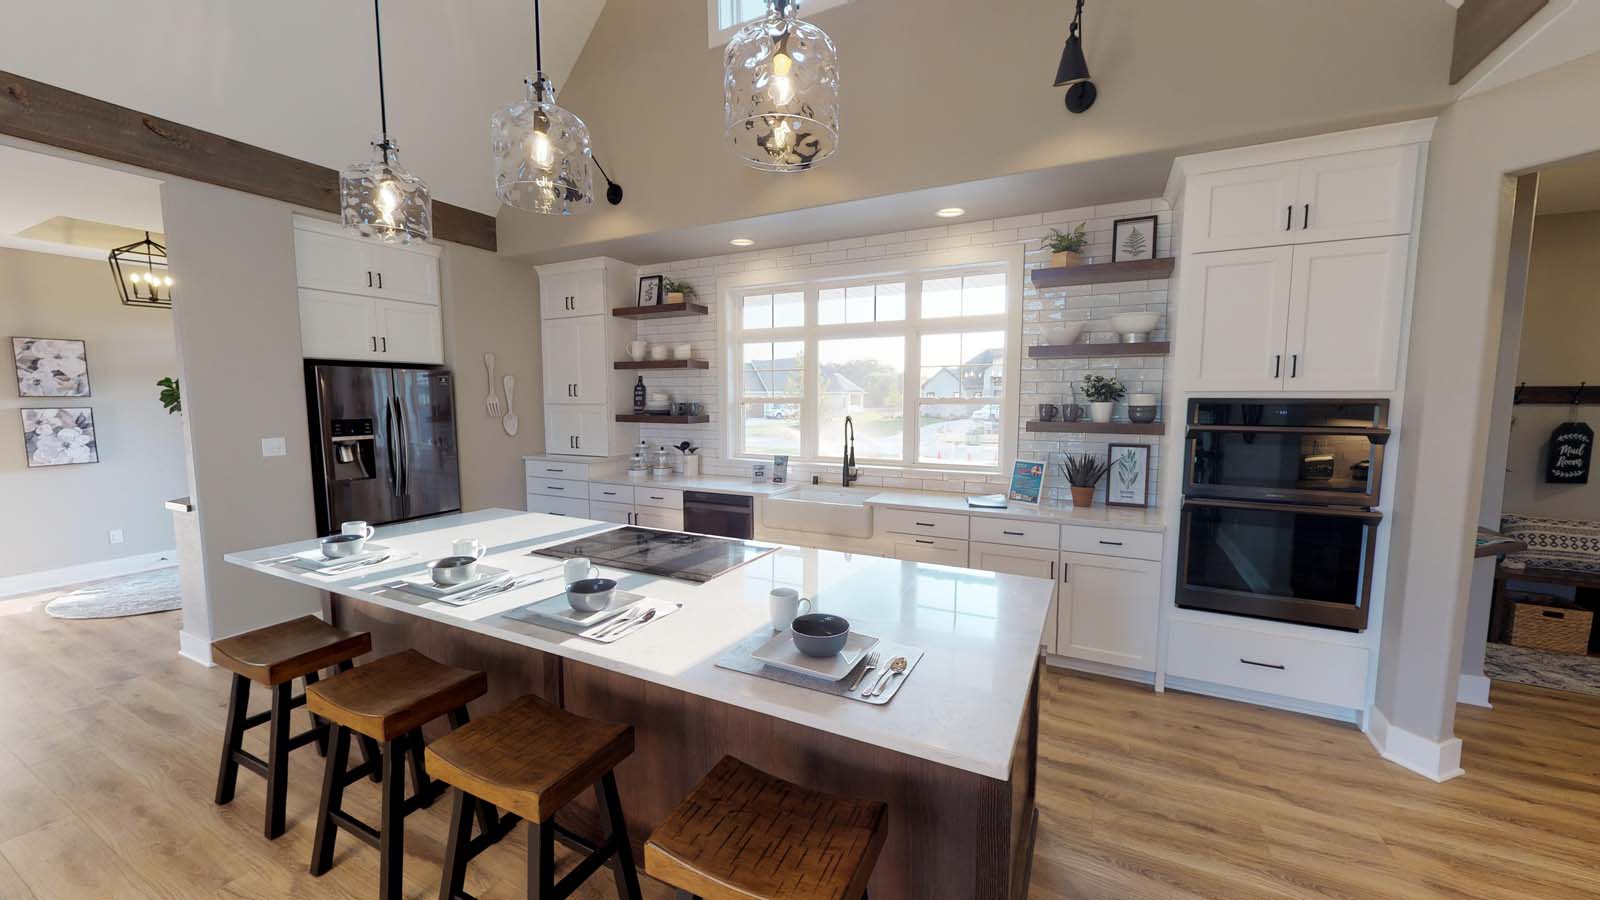 Demlang Builders - The Harper model home kitchen